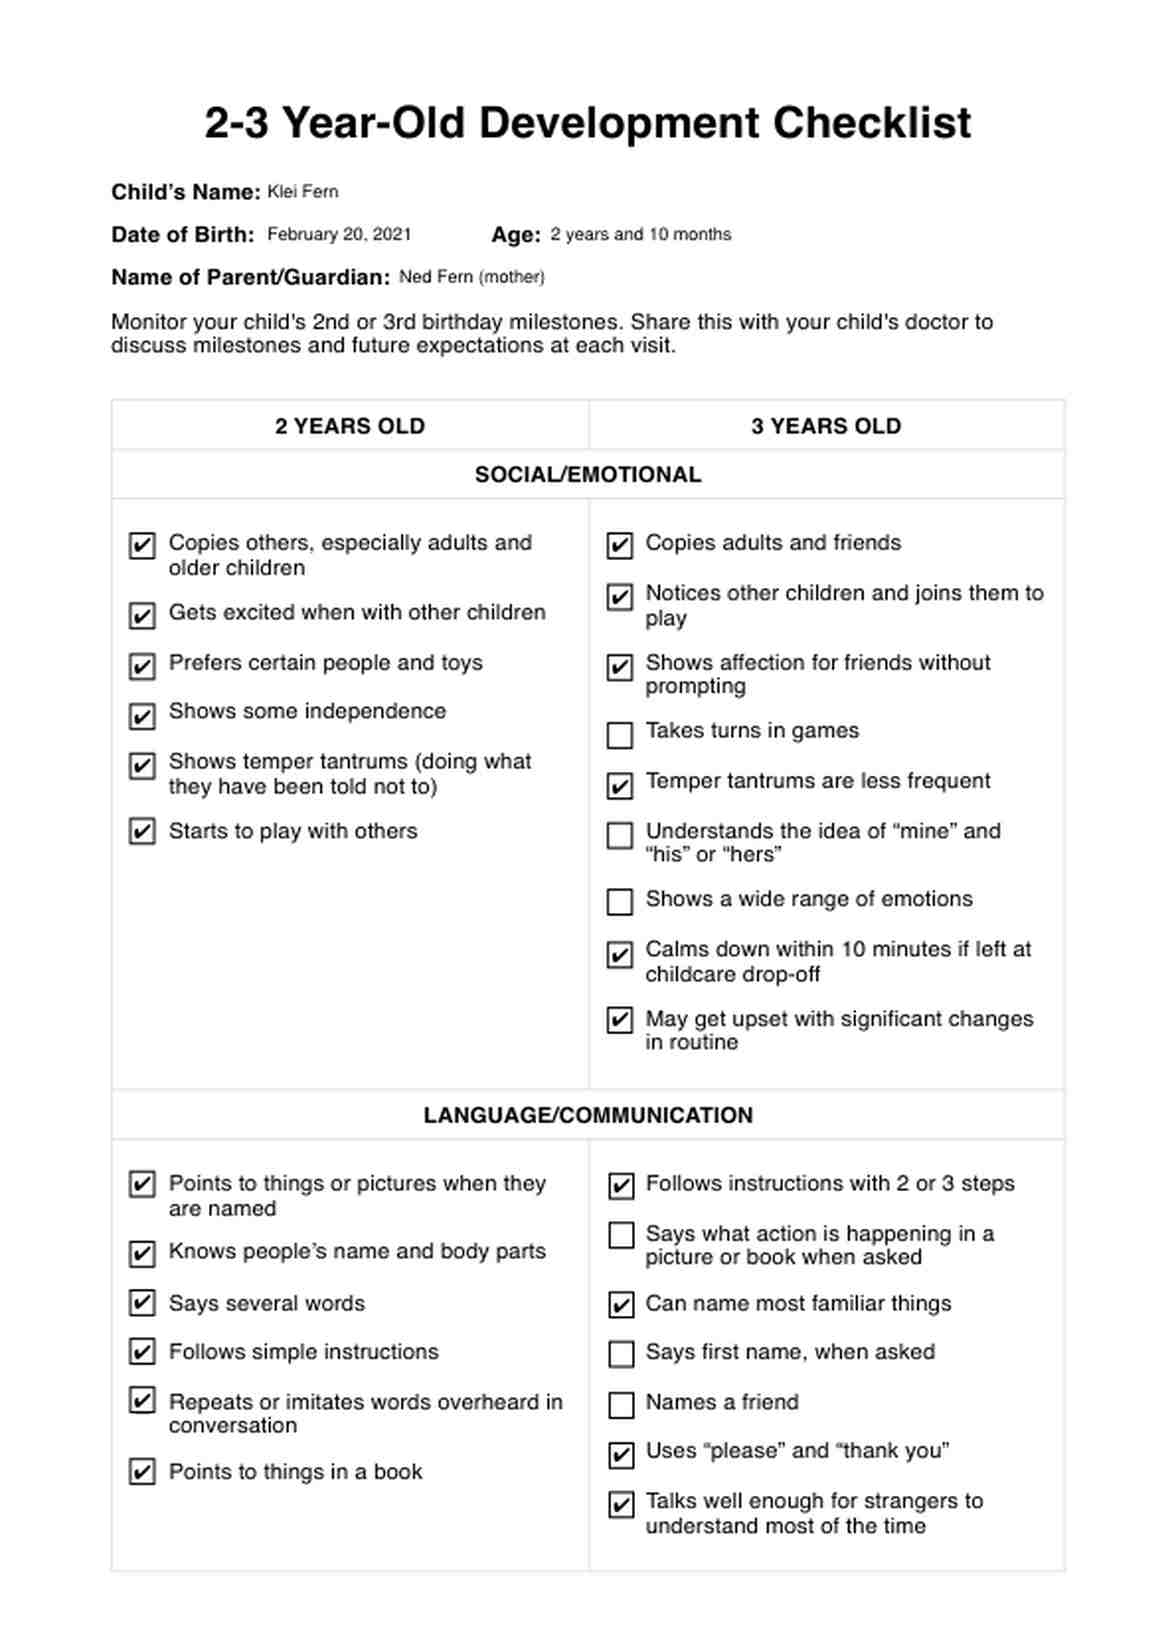 2-3 Year-Old Development Checklist PDF Example